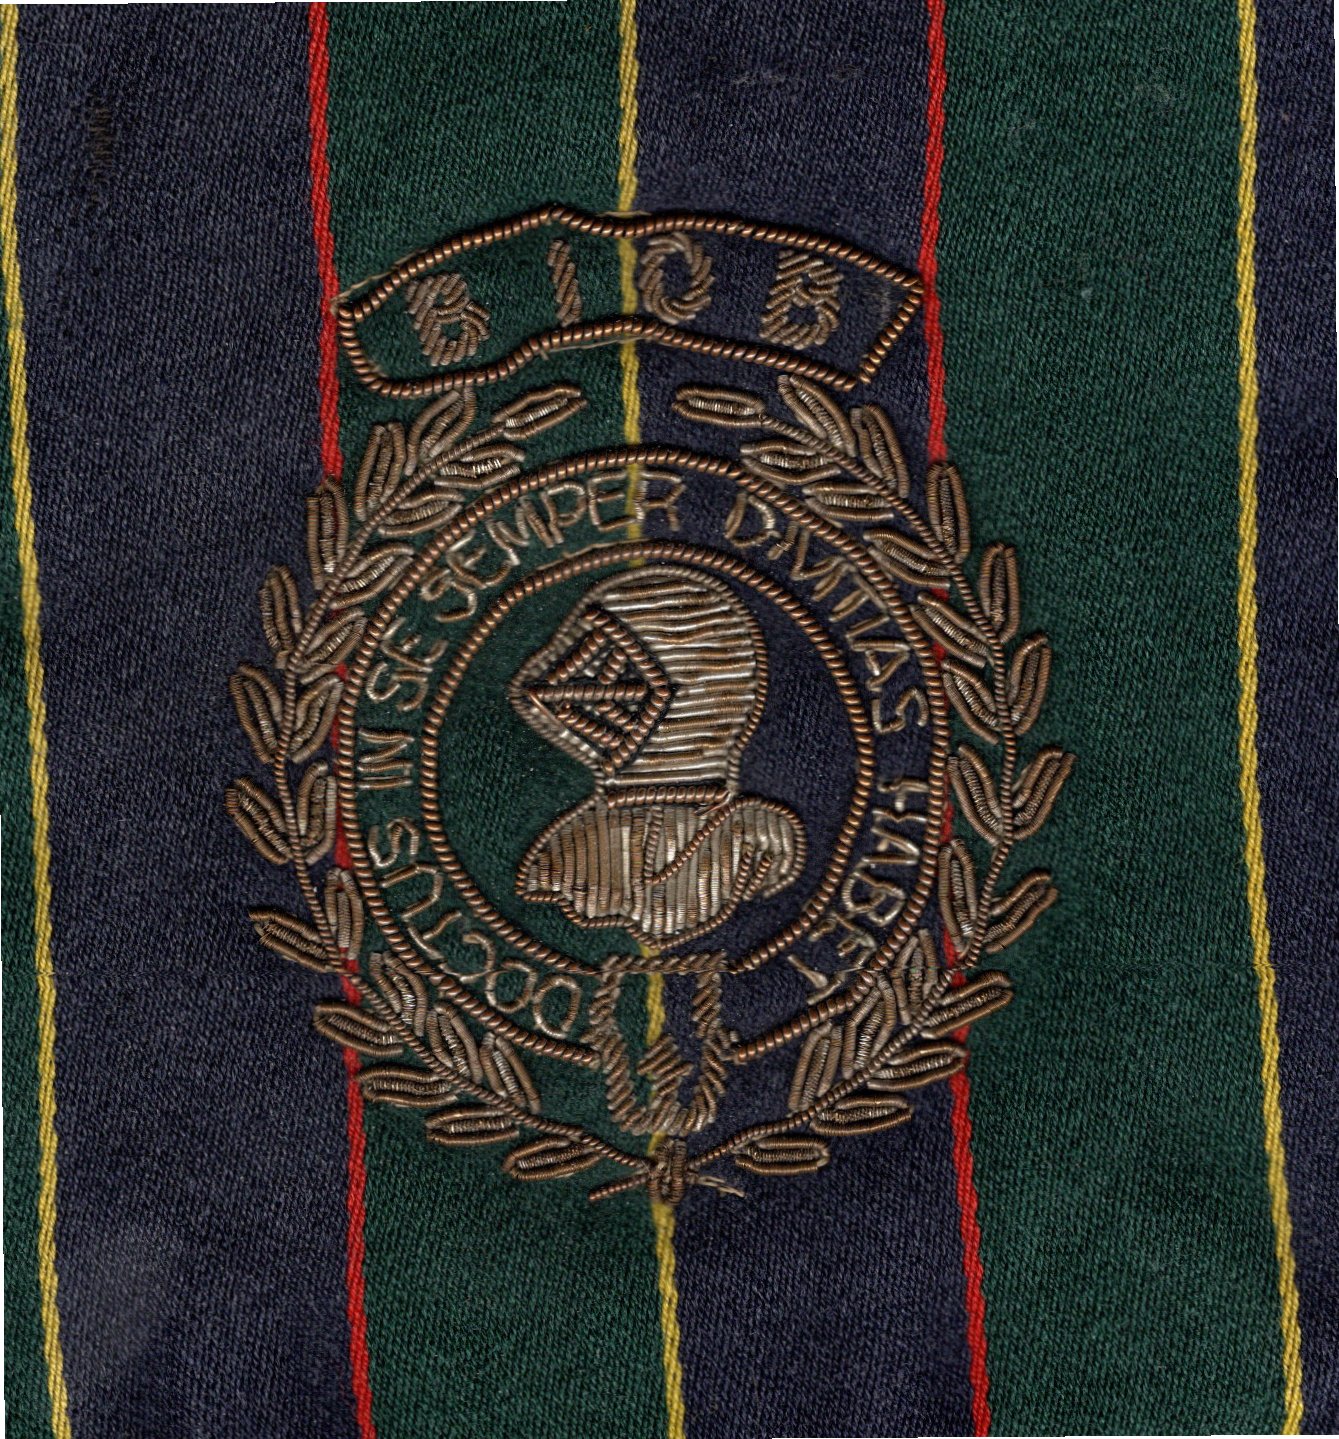 Photograph of Old Boys Striped Blazer Badge